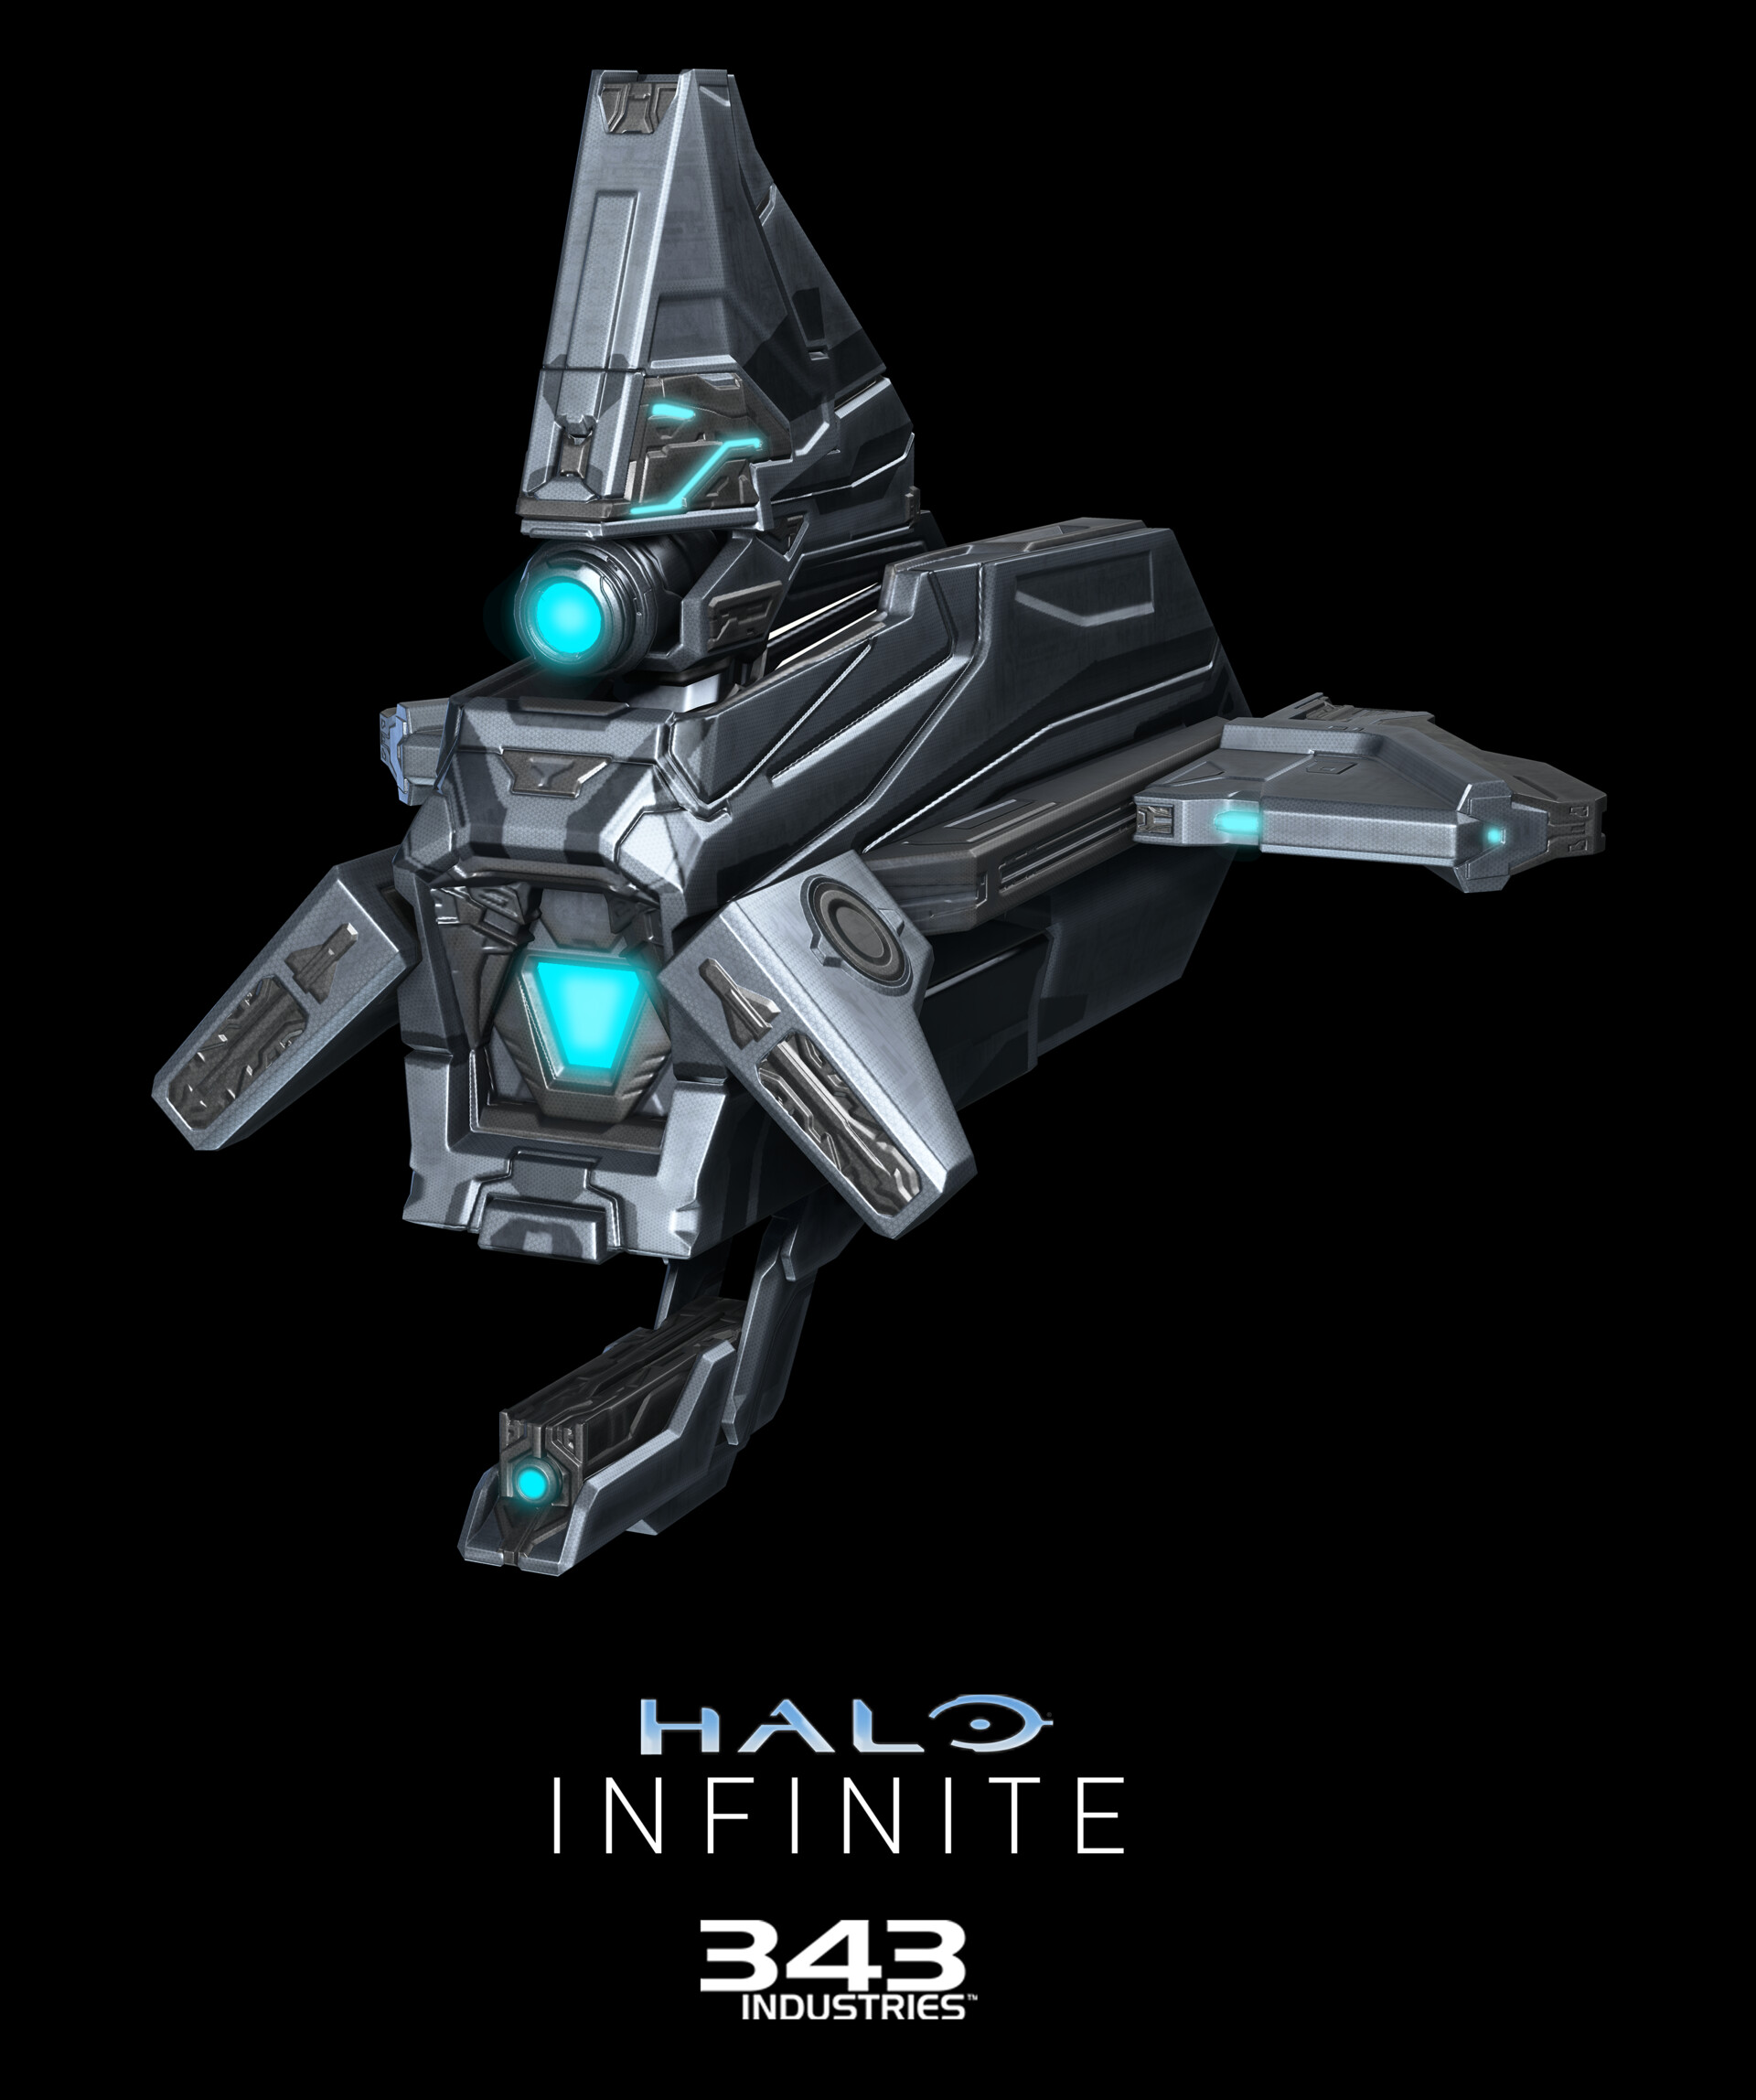 HINF-Sentinel render 04 (Josh Gregory).jpg